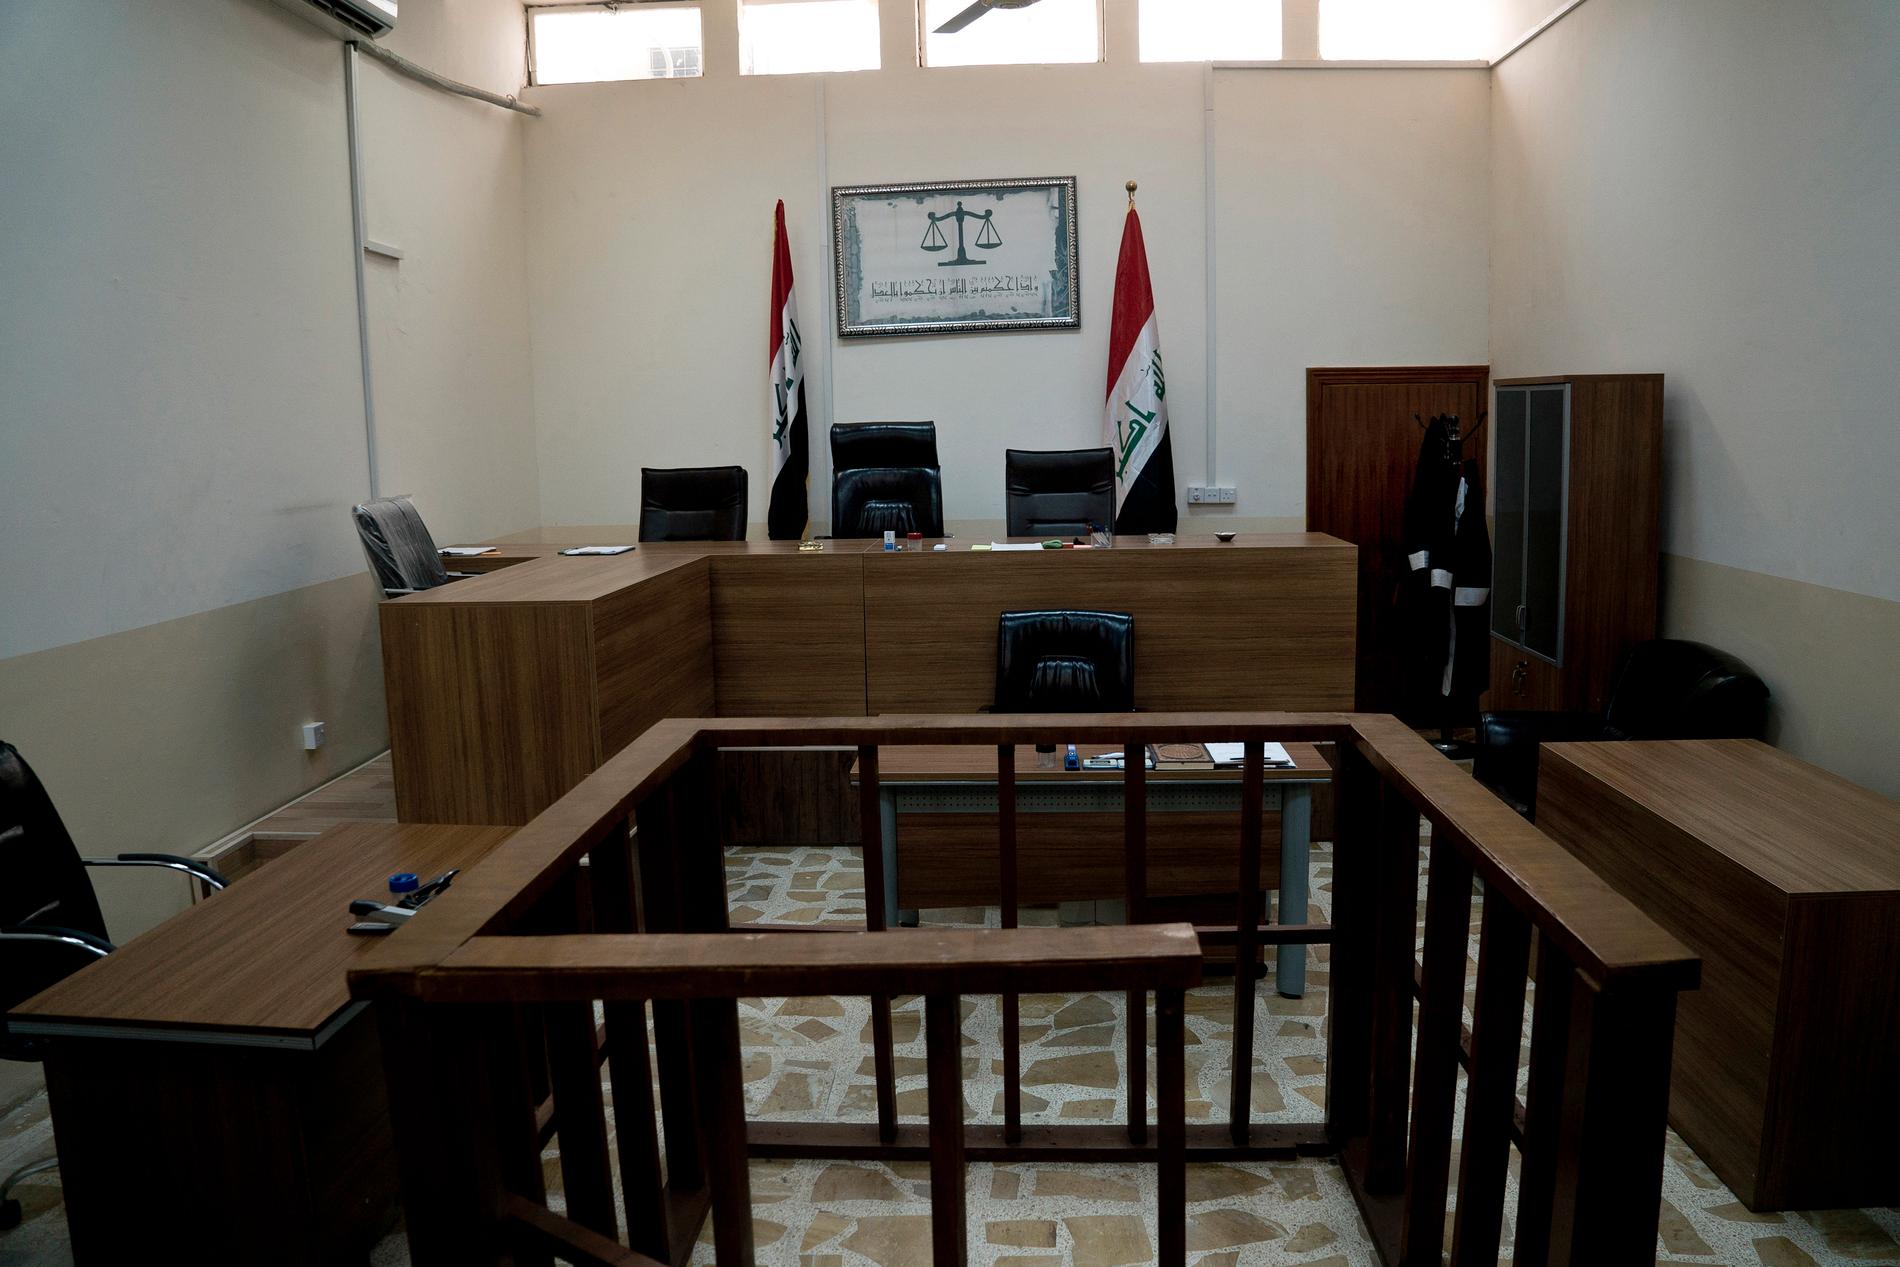 En domstolssal i Irak. Arkivbild.